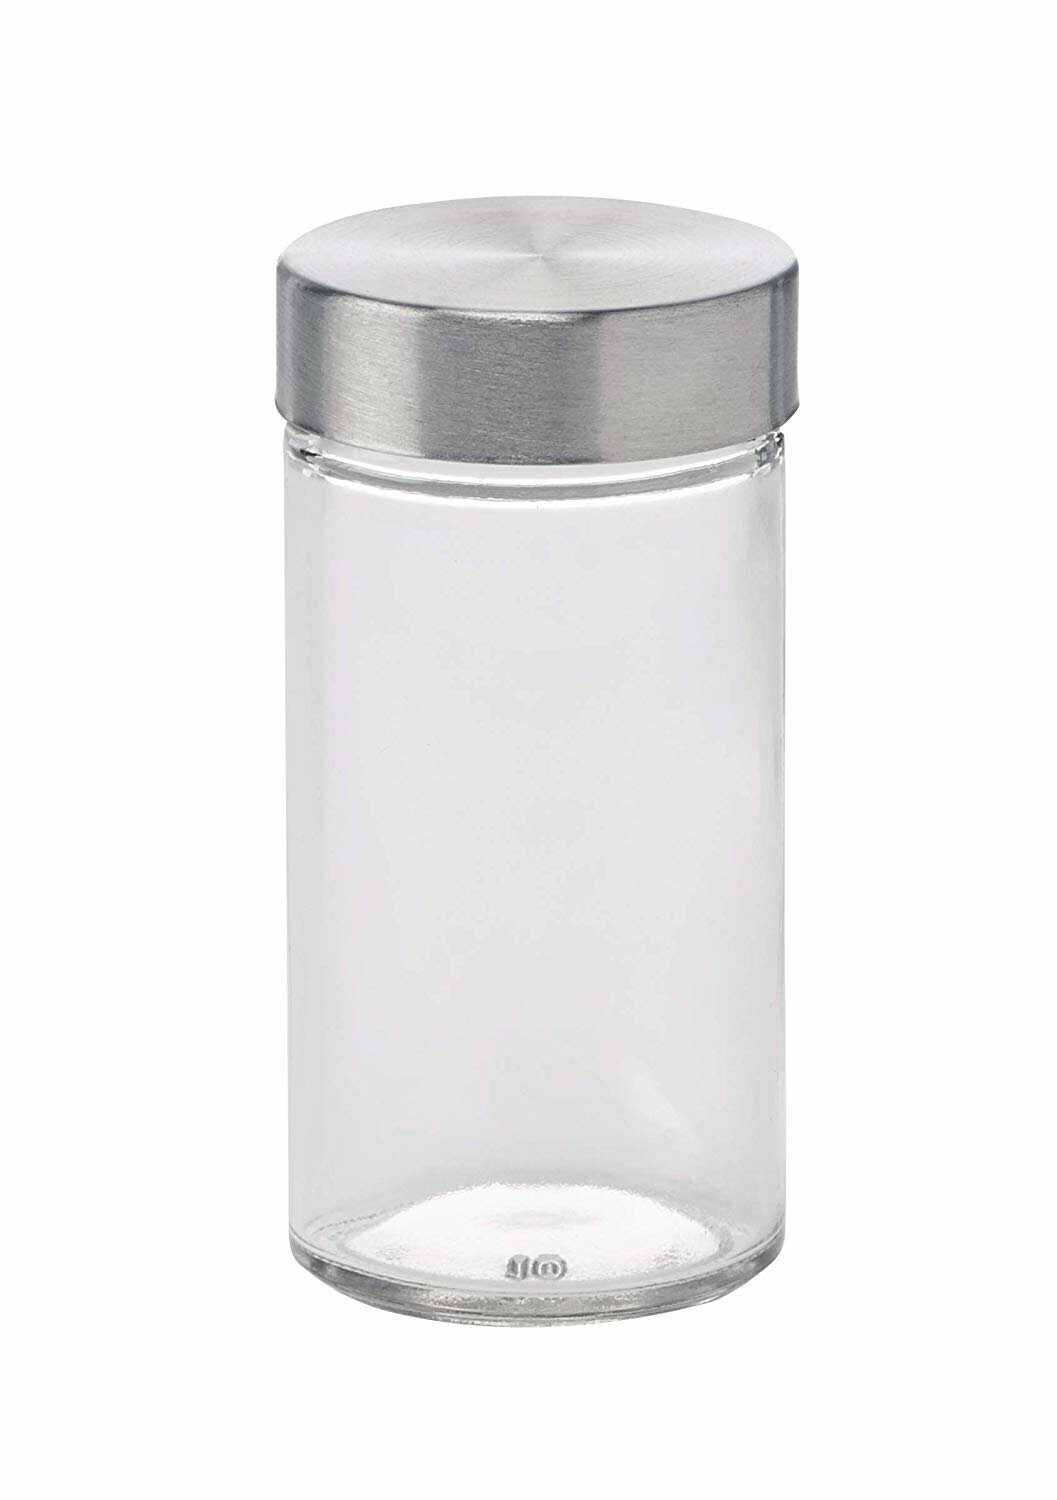 kamenstein glass spice jars